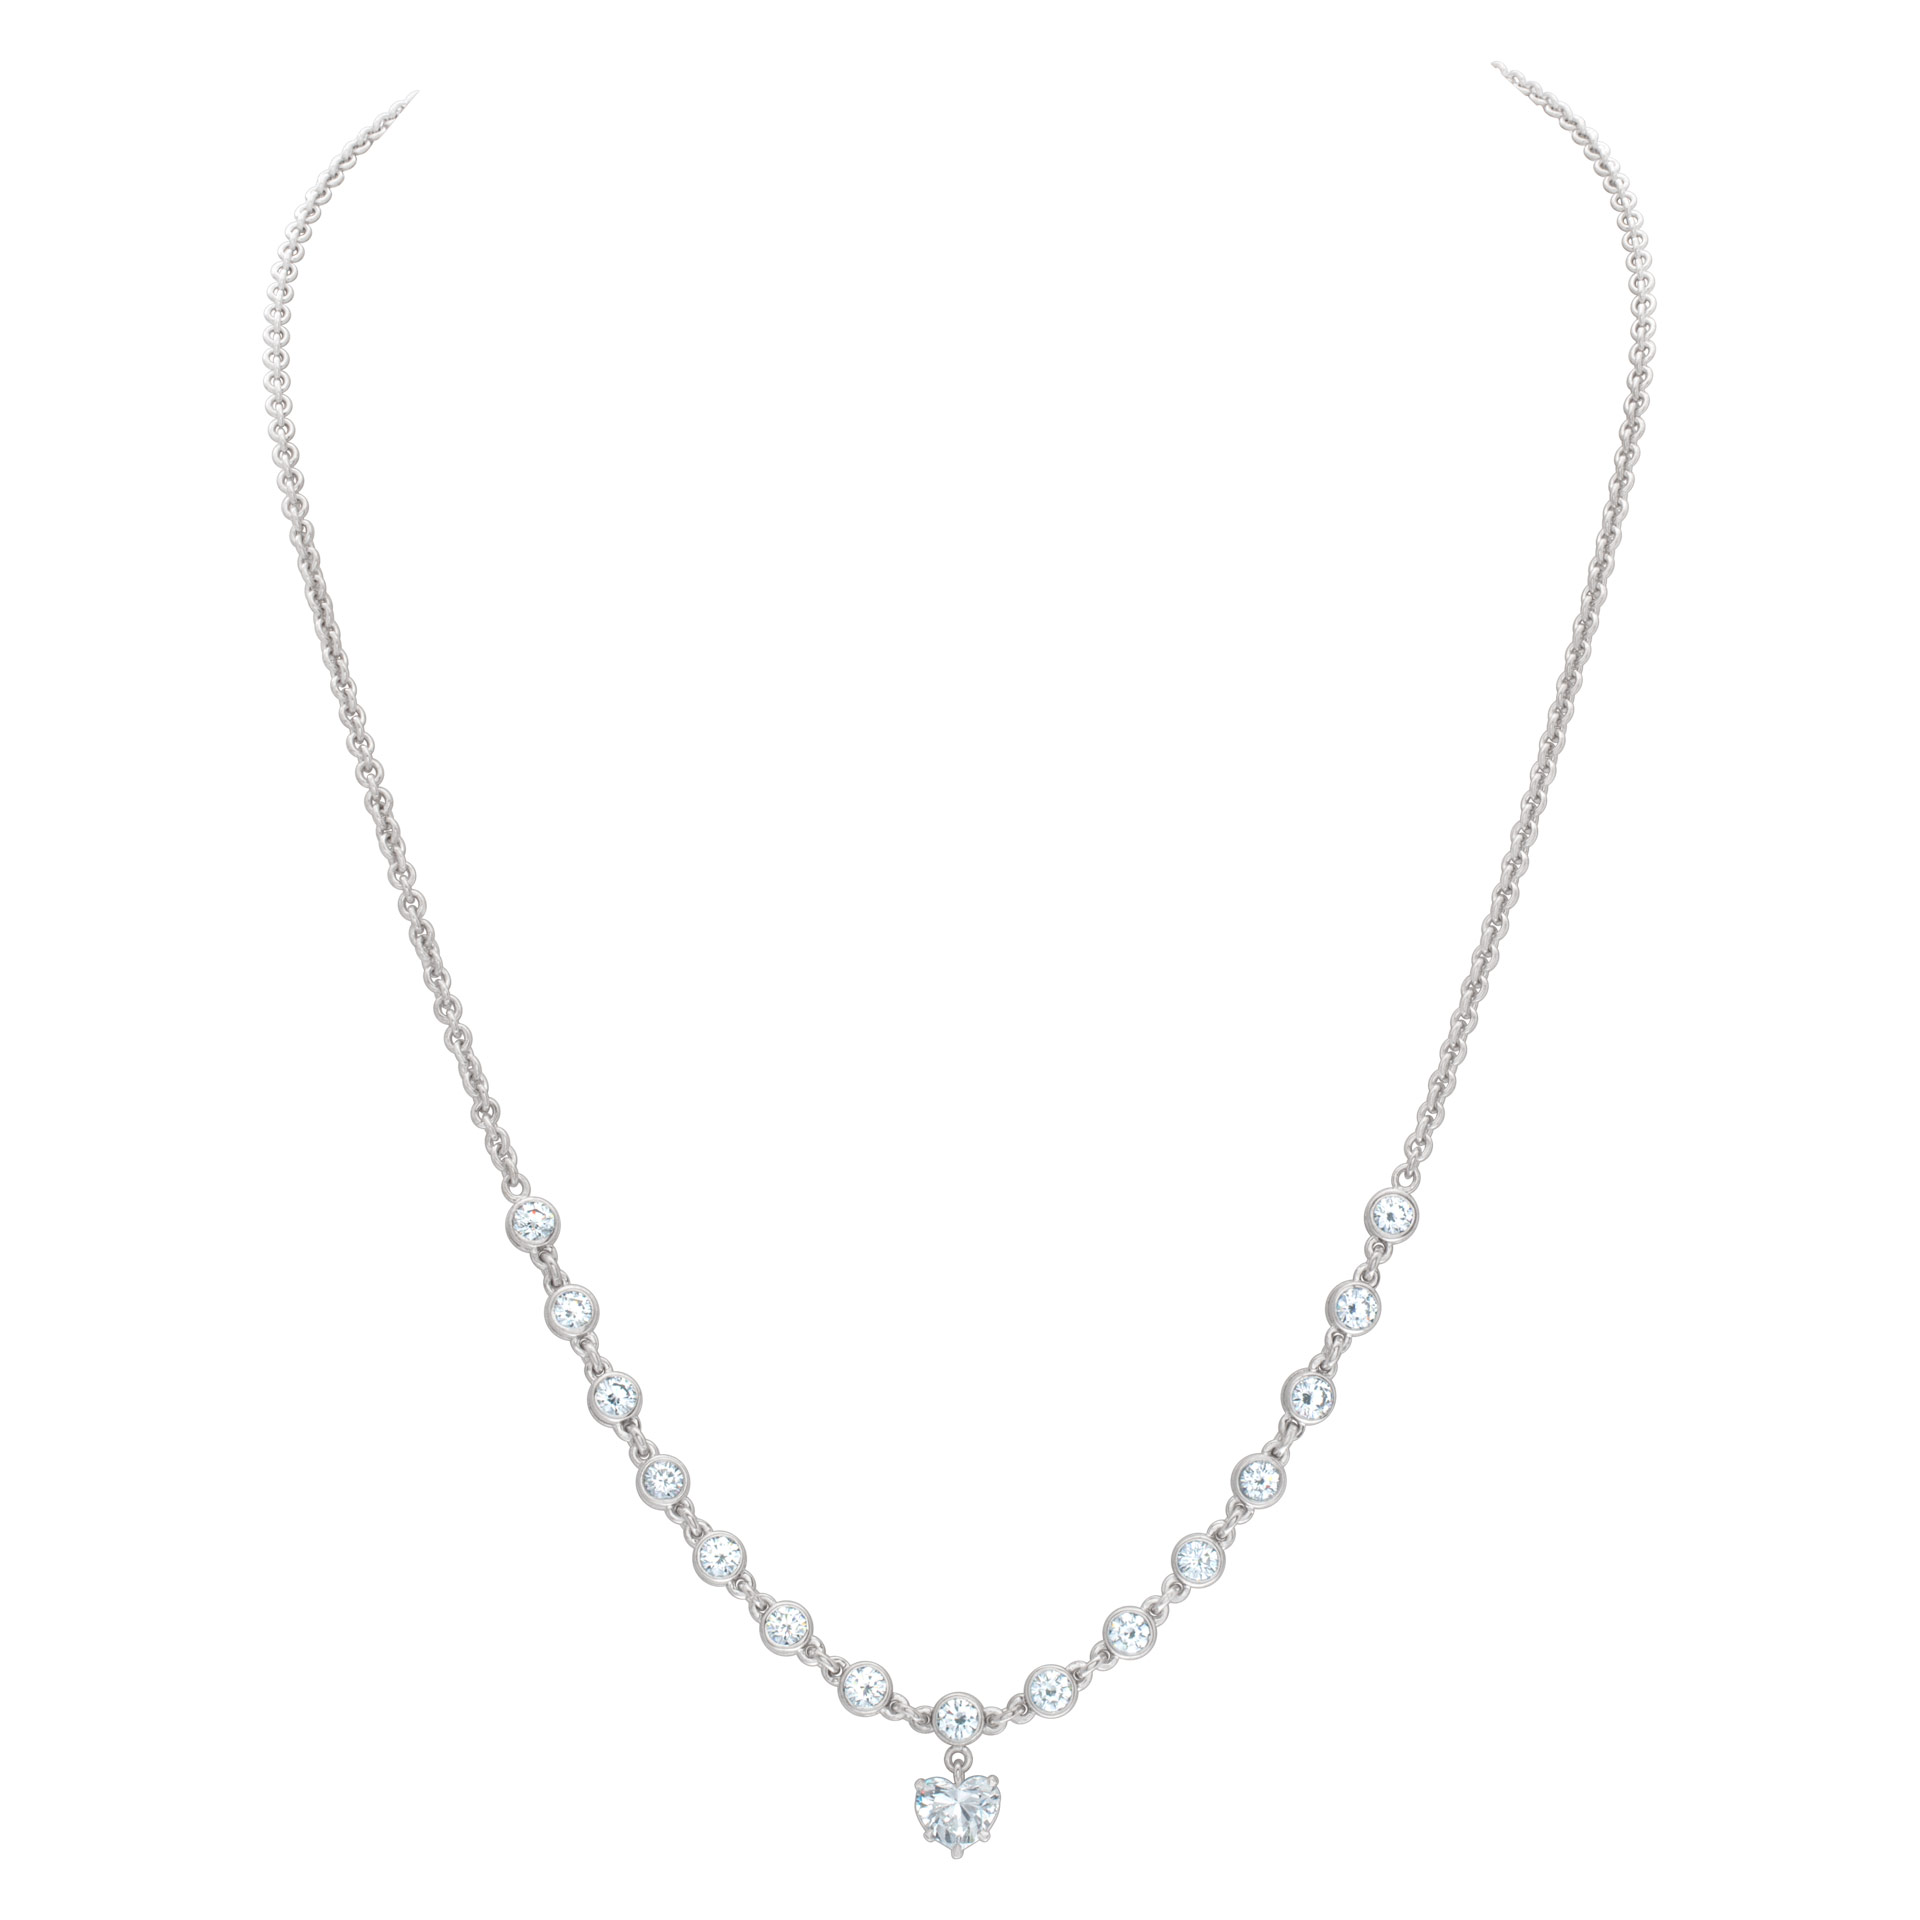 GIA certified heart brilliant cut diamond 1 carat (F color, VS2 clarity) necklace with bezel set round full cut diamonds image 1